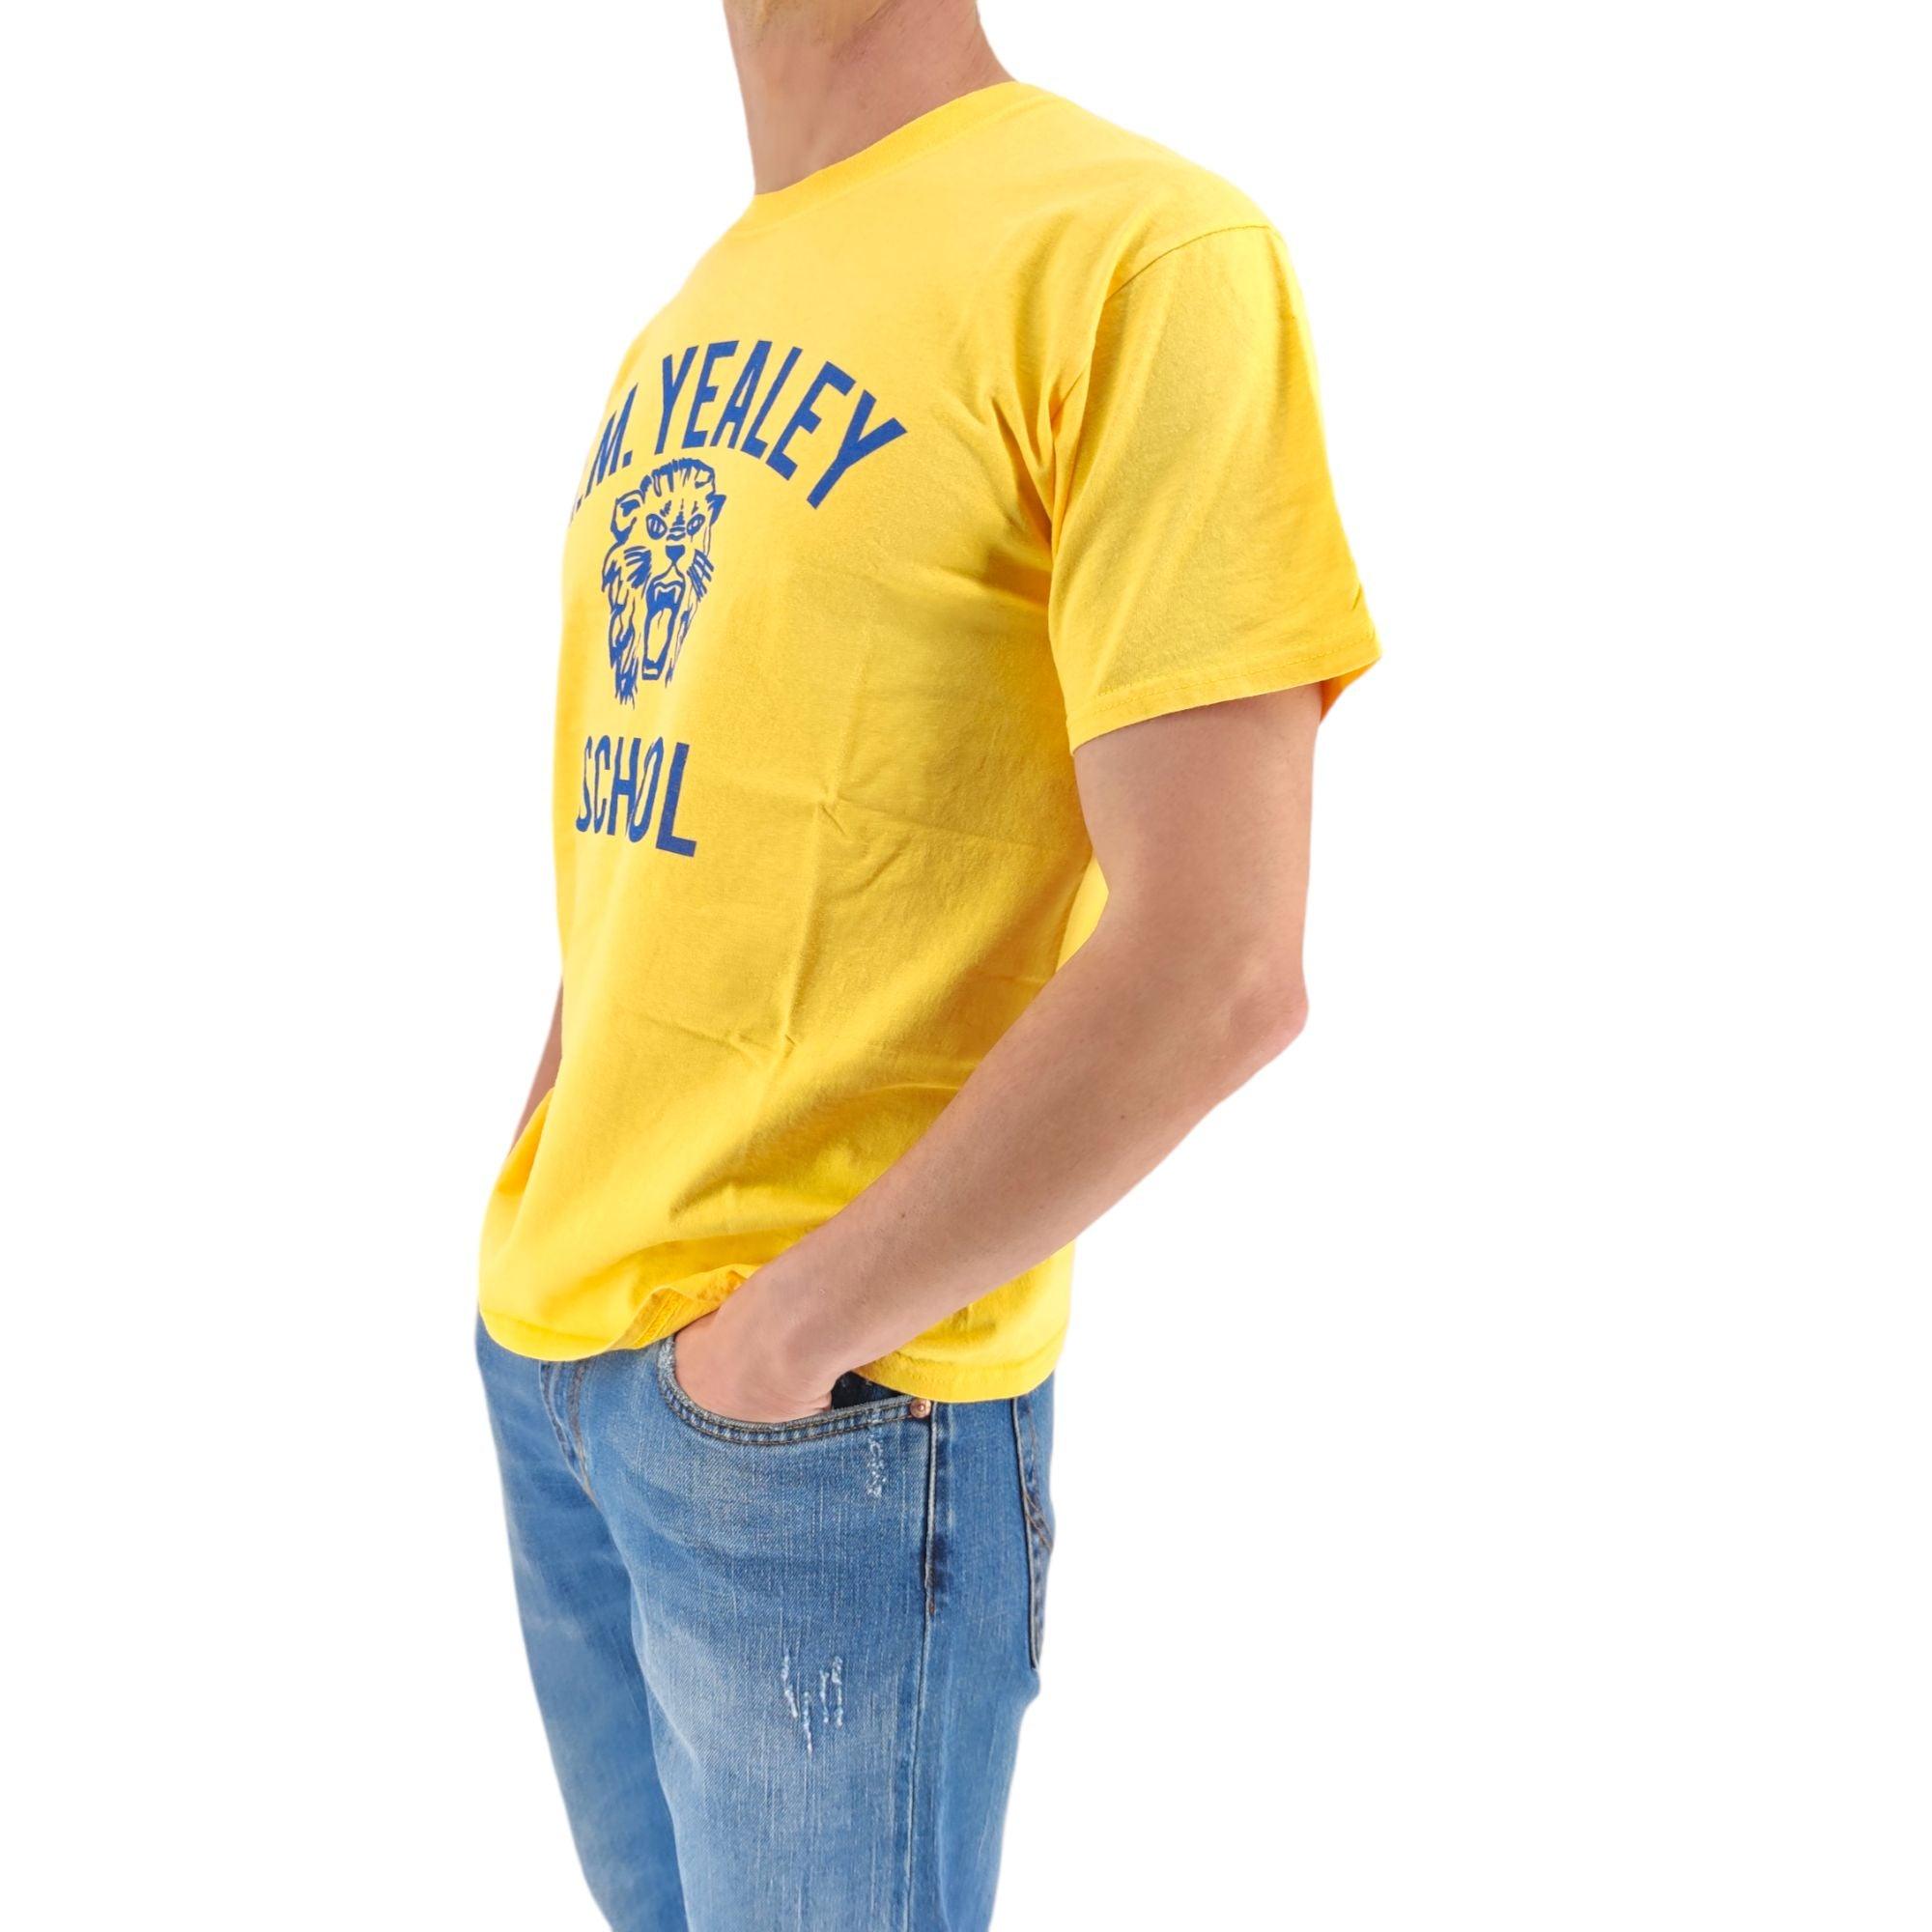 Wild Donkey | T-shirt Yealey Uomo Yellow - Fabbrica Ski Sises